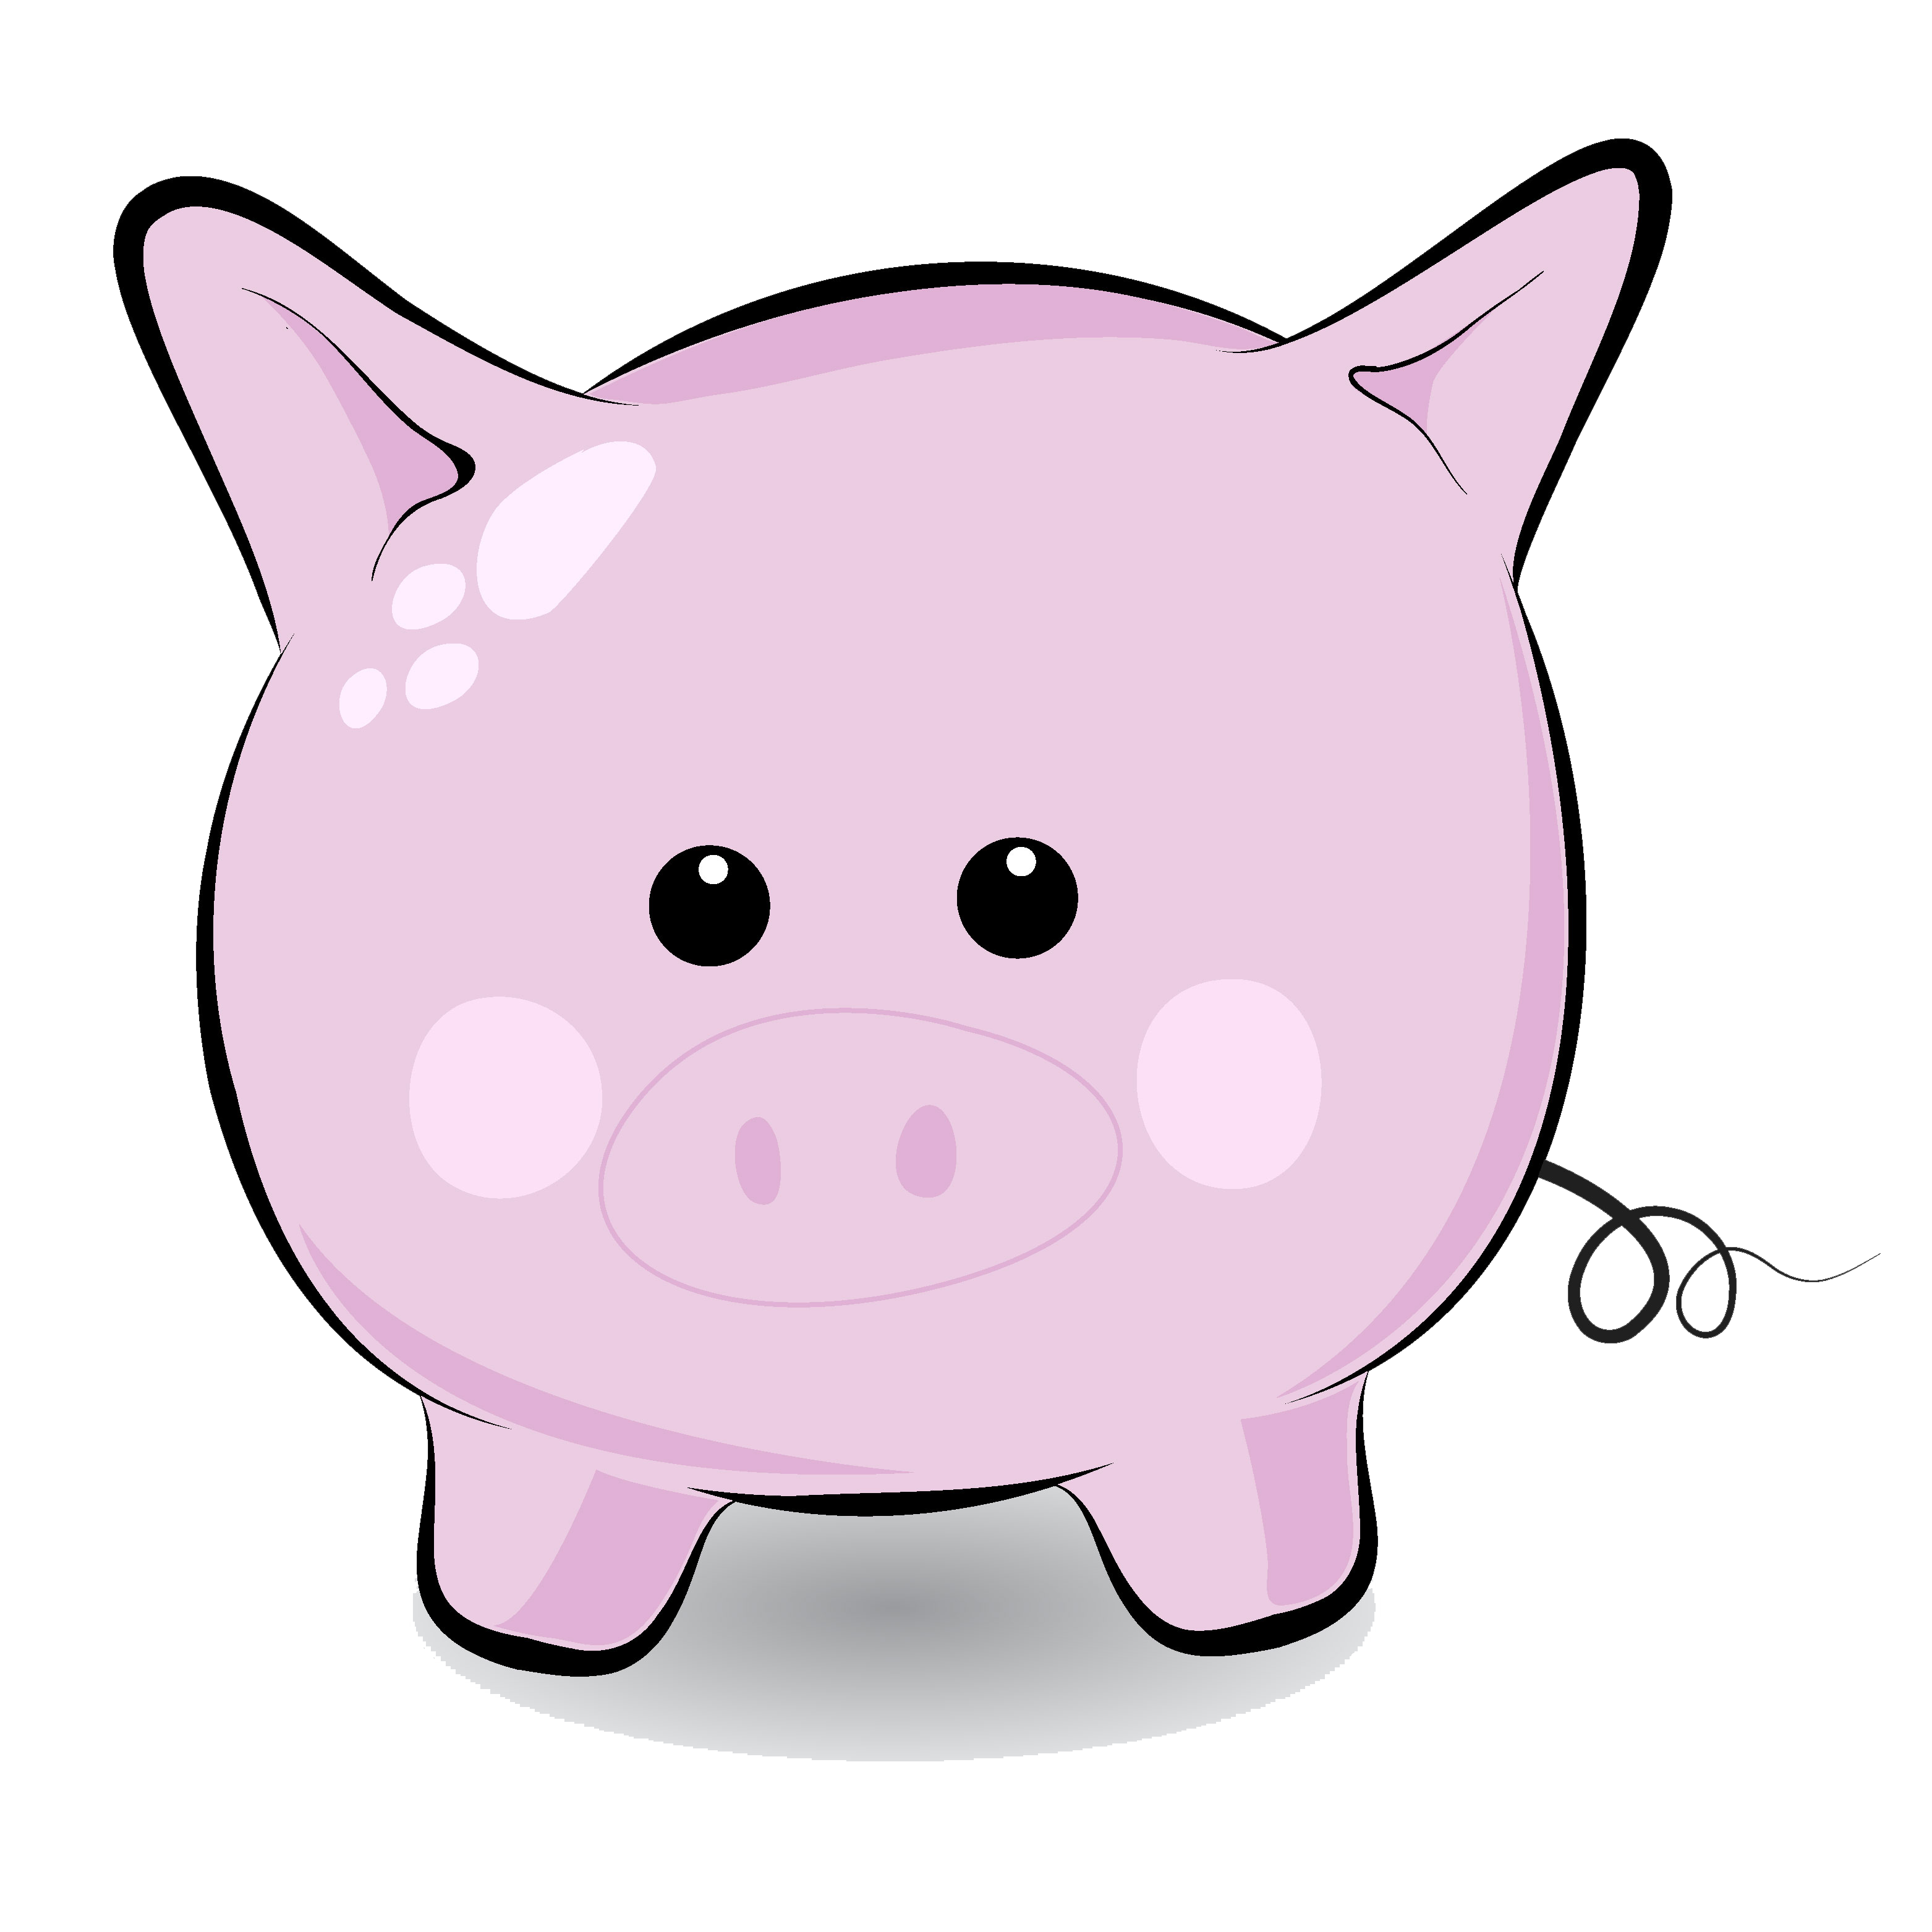 Cute pig face clip art free clipart images 4